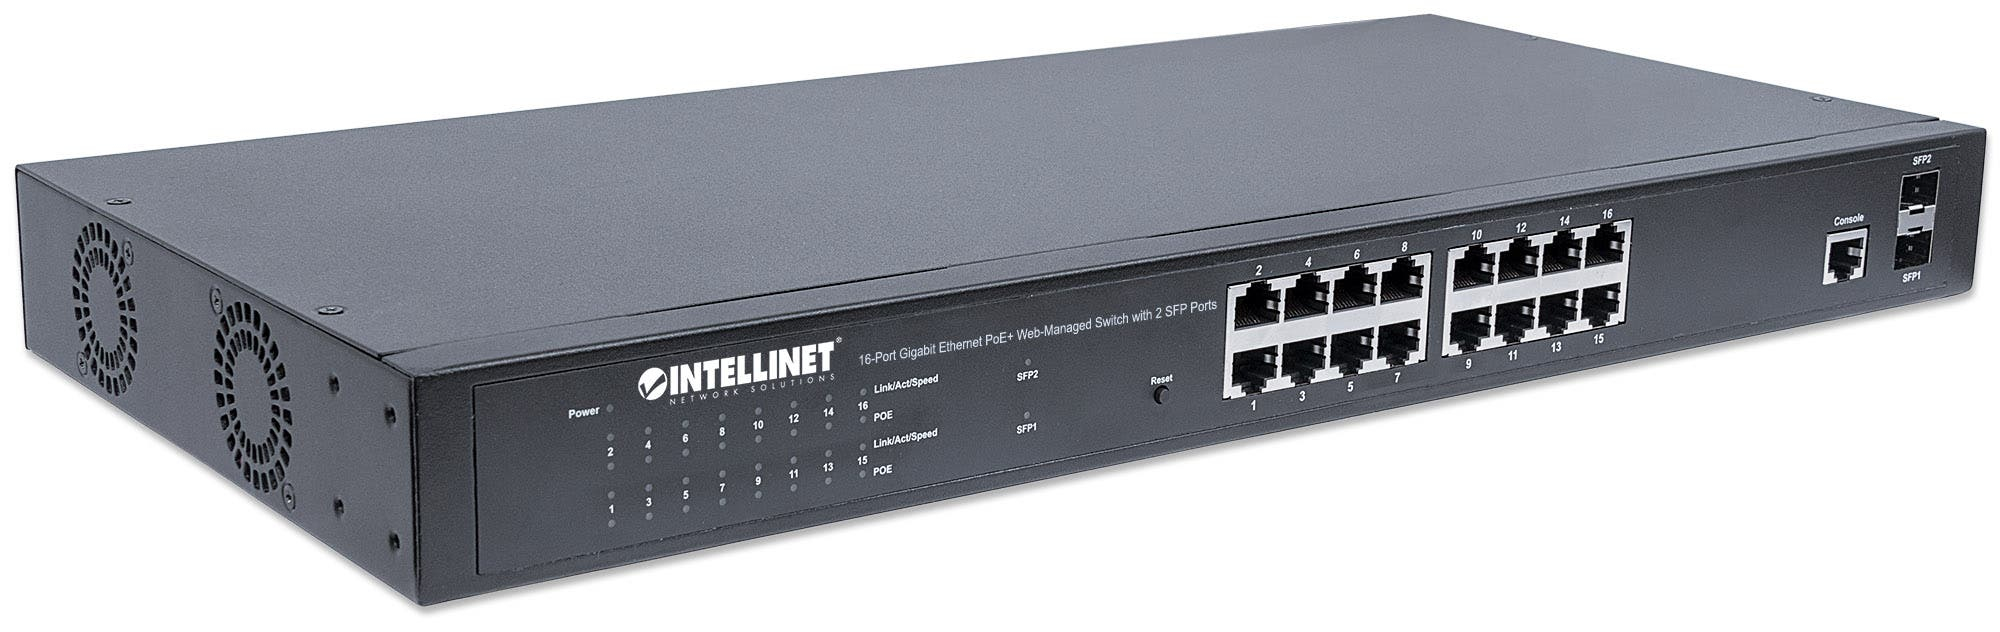 Intellinet 16-Port Gigabit Ethernet PoE+ Web-Managed Switch with 2 SFP Ports, IEEE 802.3at/af Power over Ethernet (PoE+/PoE) Compliant, 374 W, Endspan, 19" Rackmount (UK 3-pin plug)